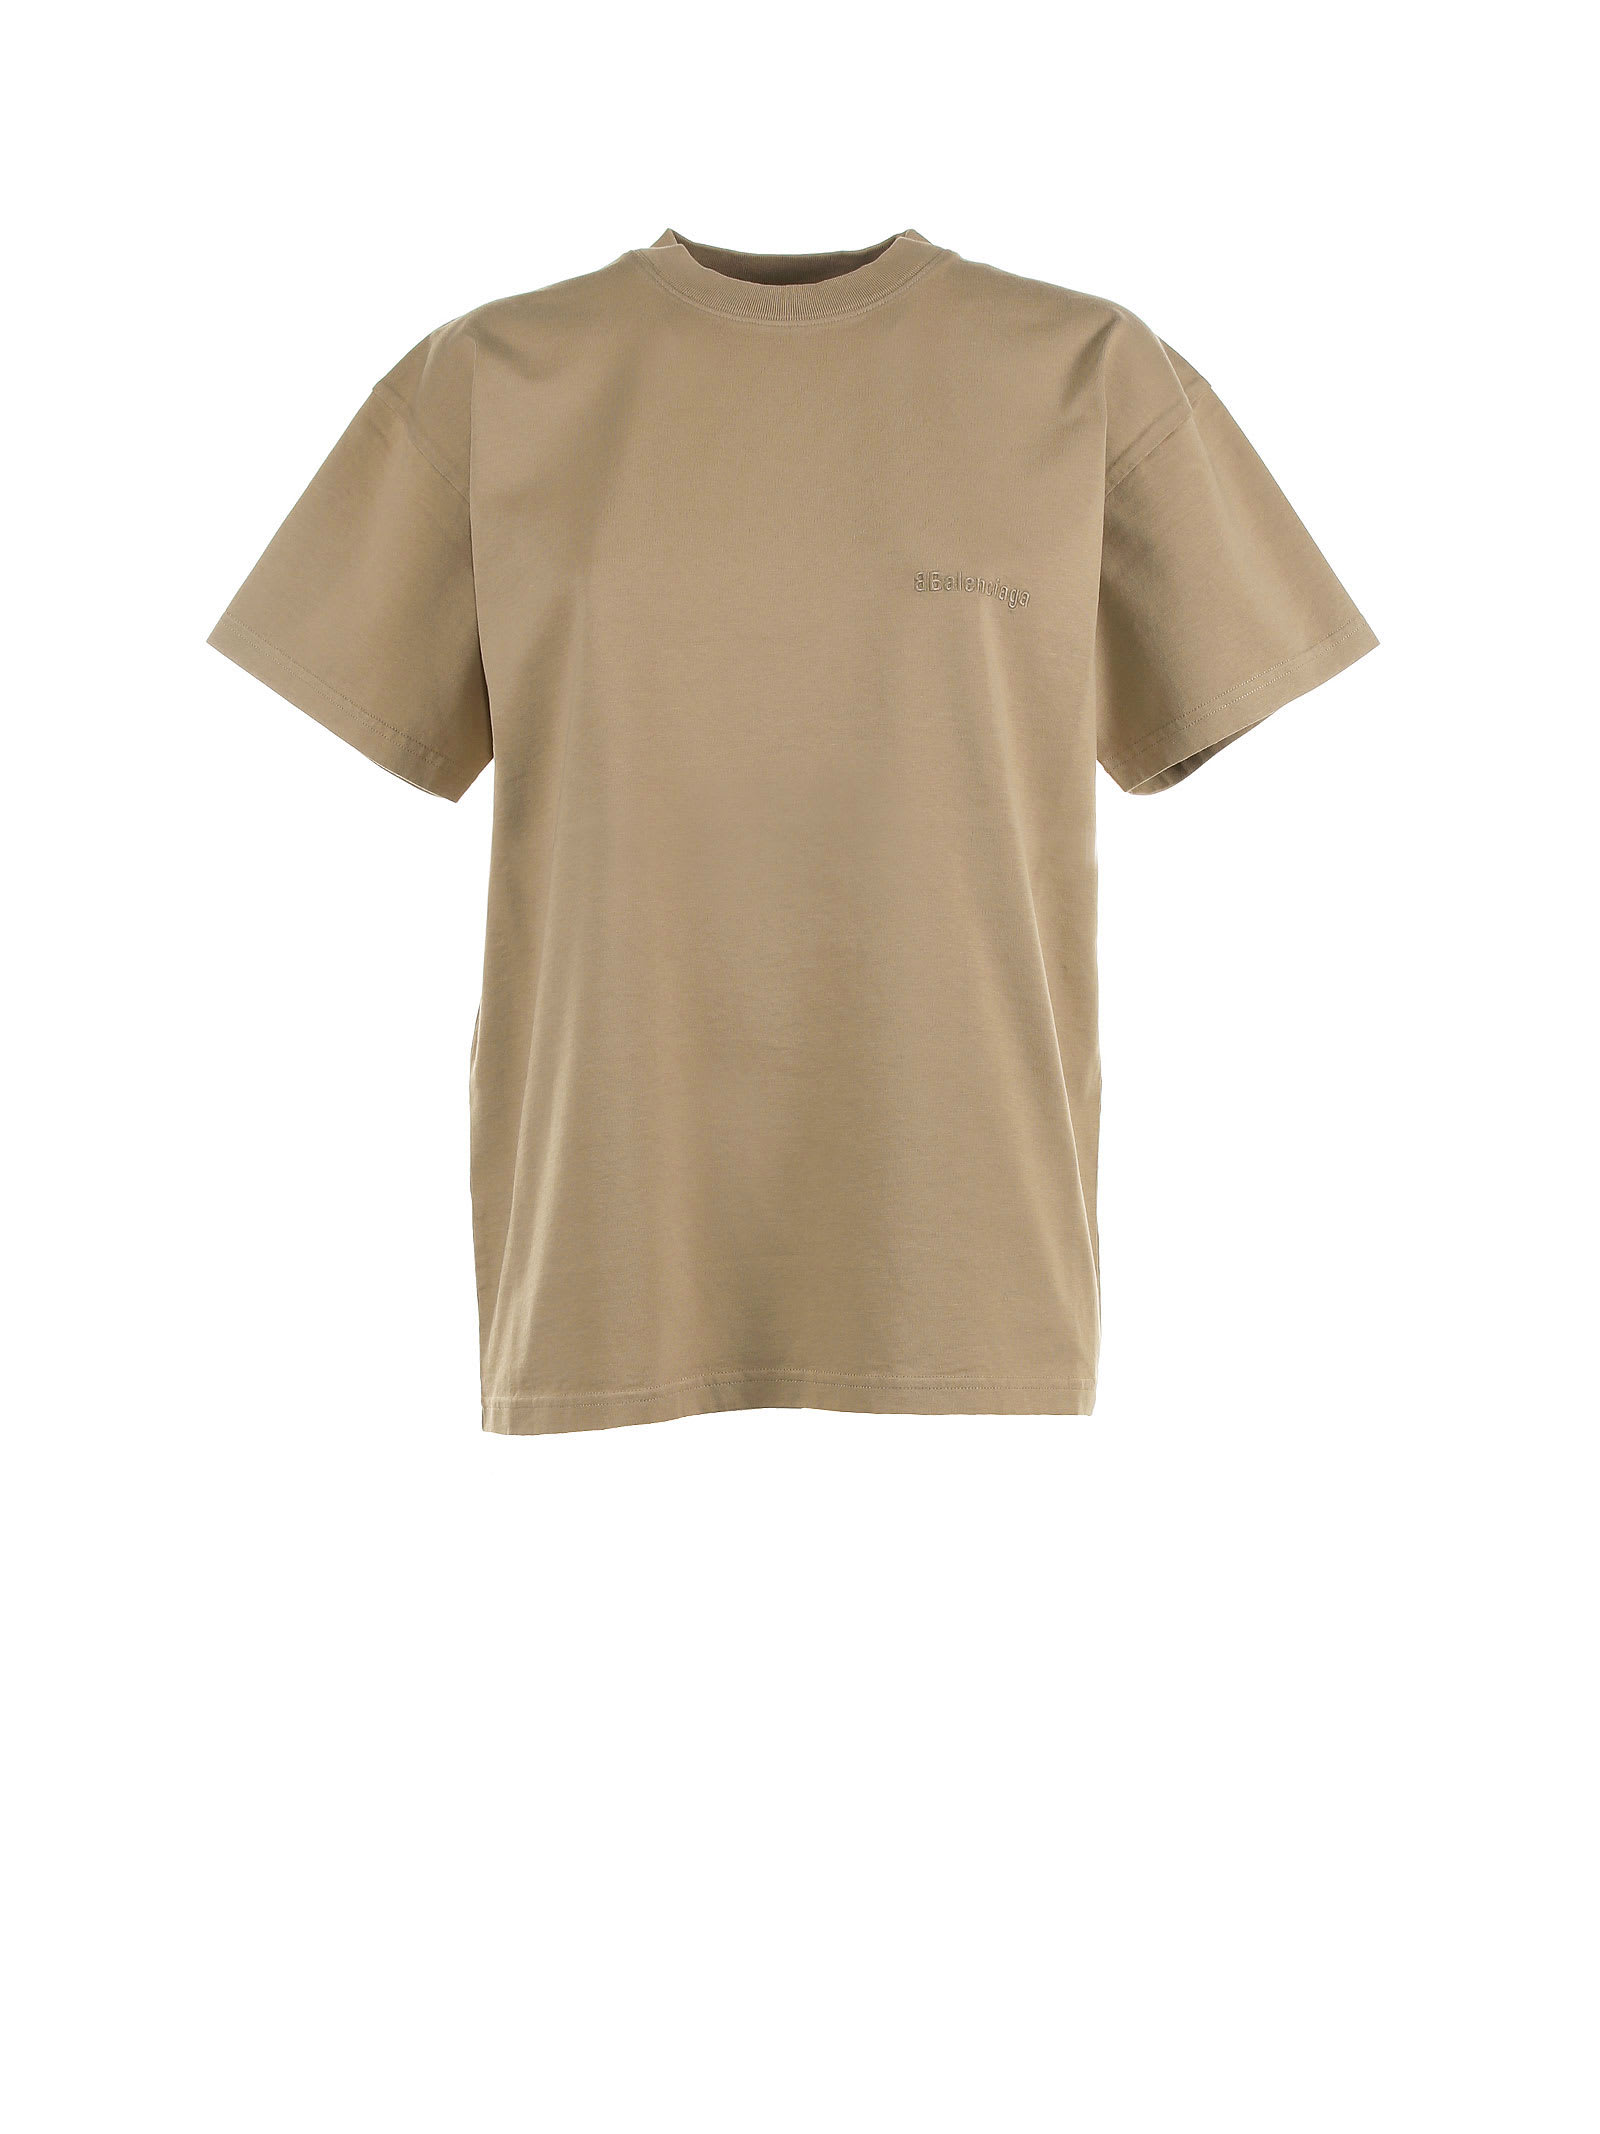 Balenciaga T-shirt In Oat Cotton